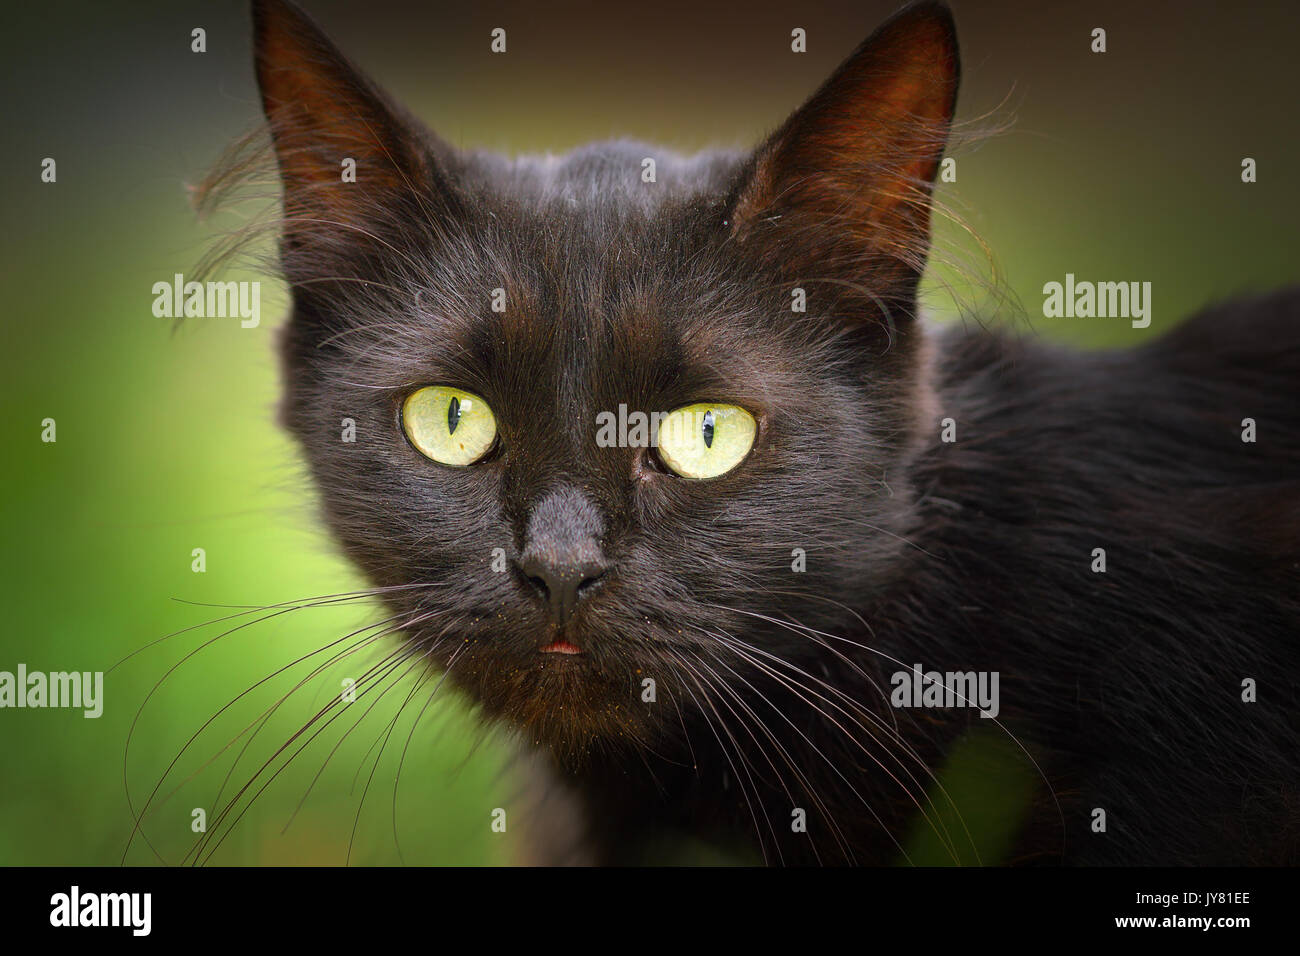 cute black cat face, portrait of domestic animal Stock Photo